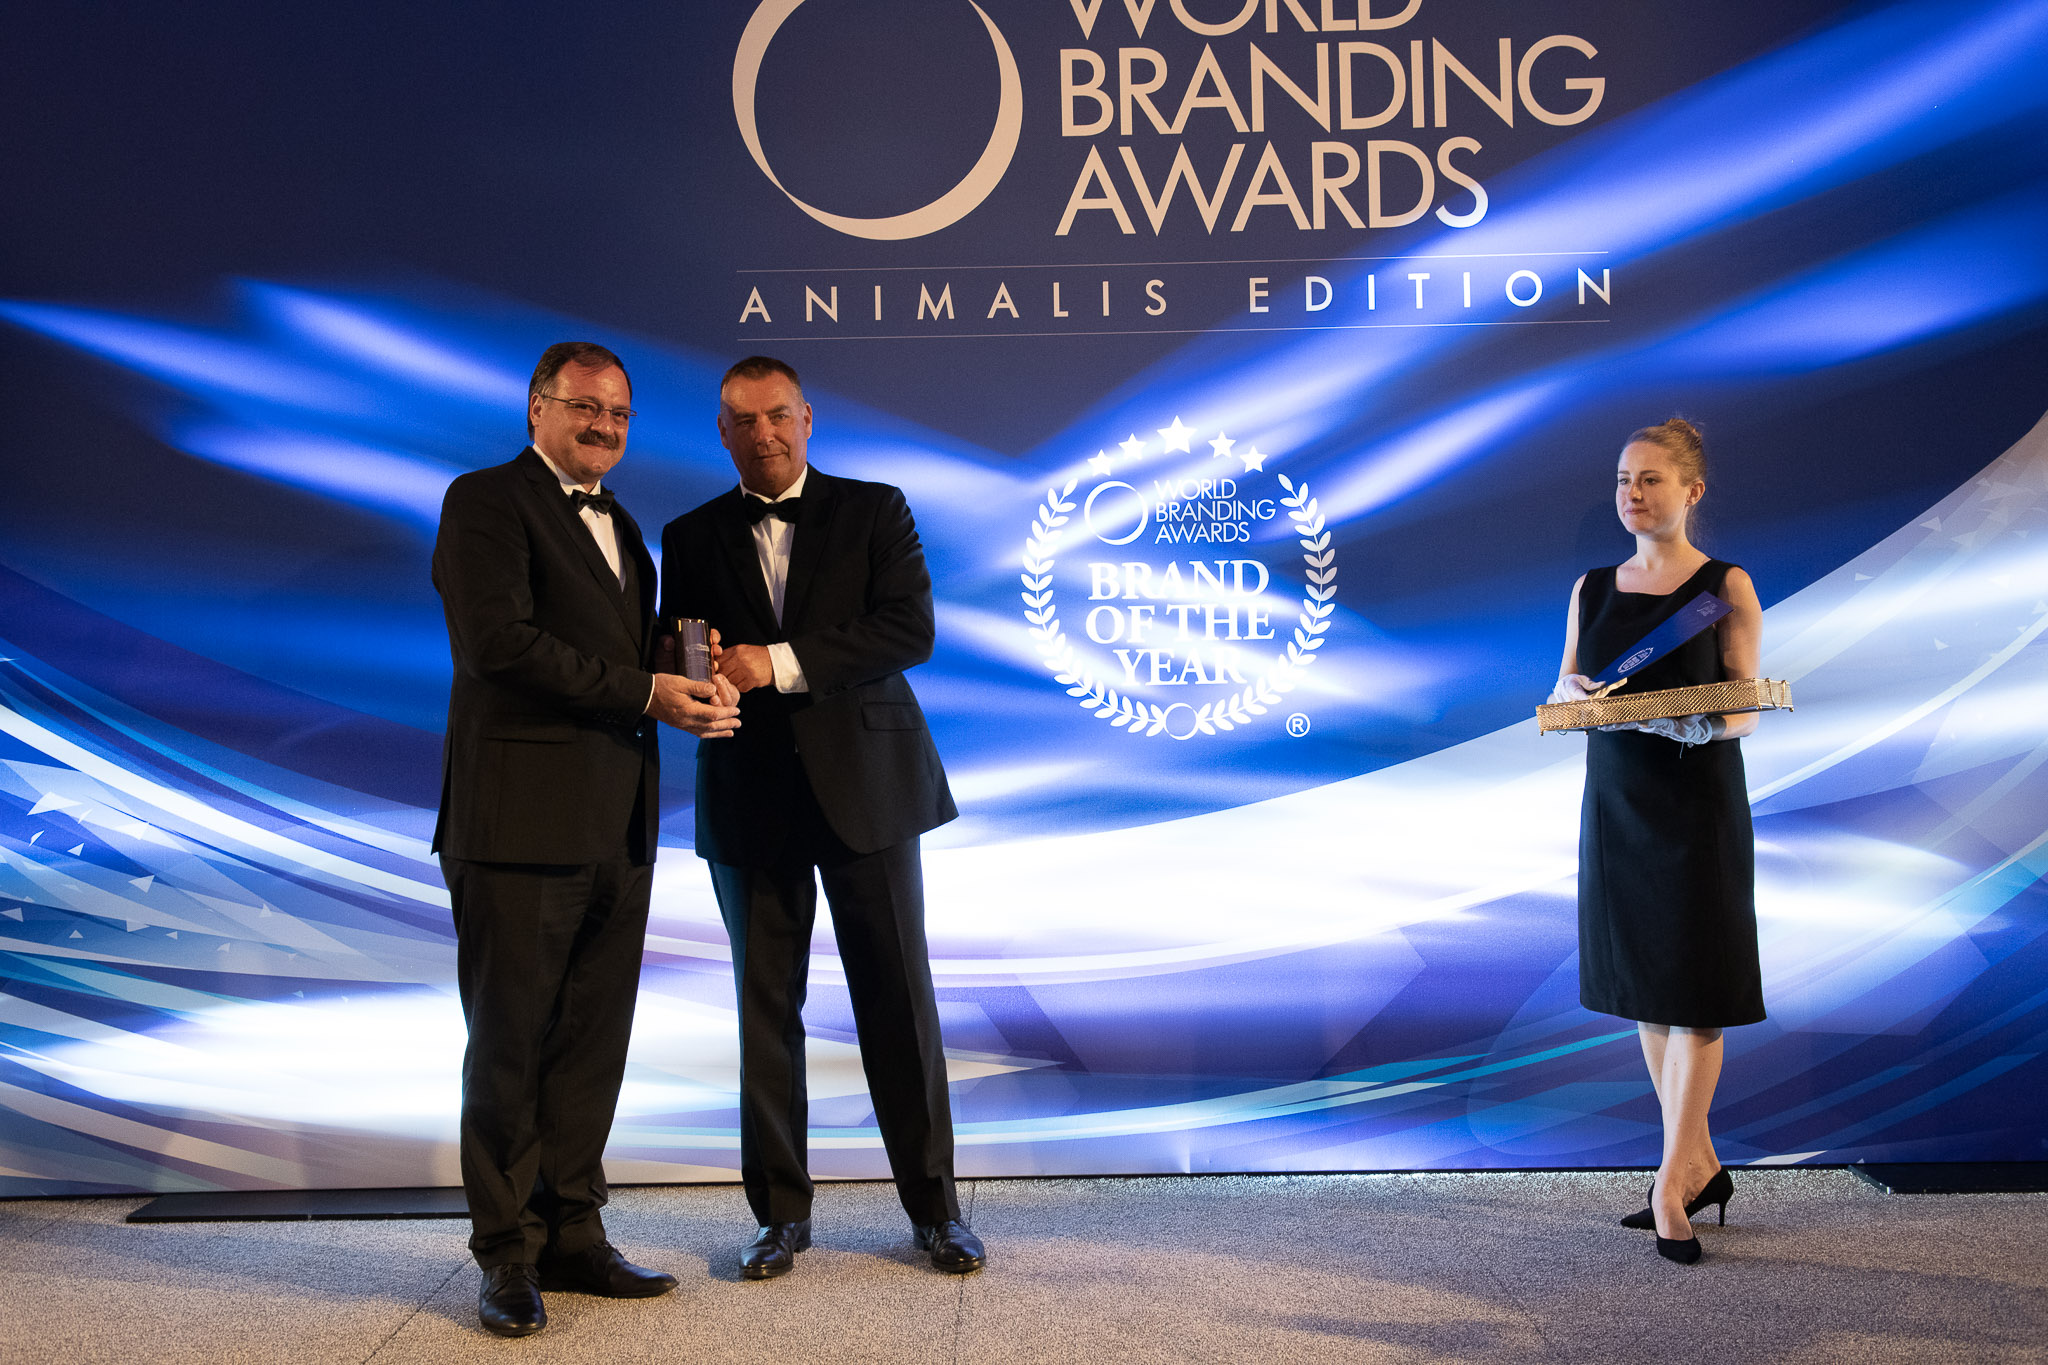 20190703_205544_world_branding_awards_animalis_7326